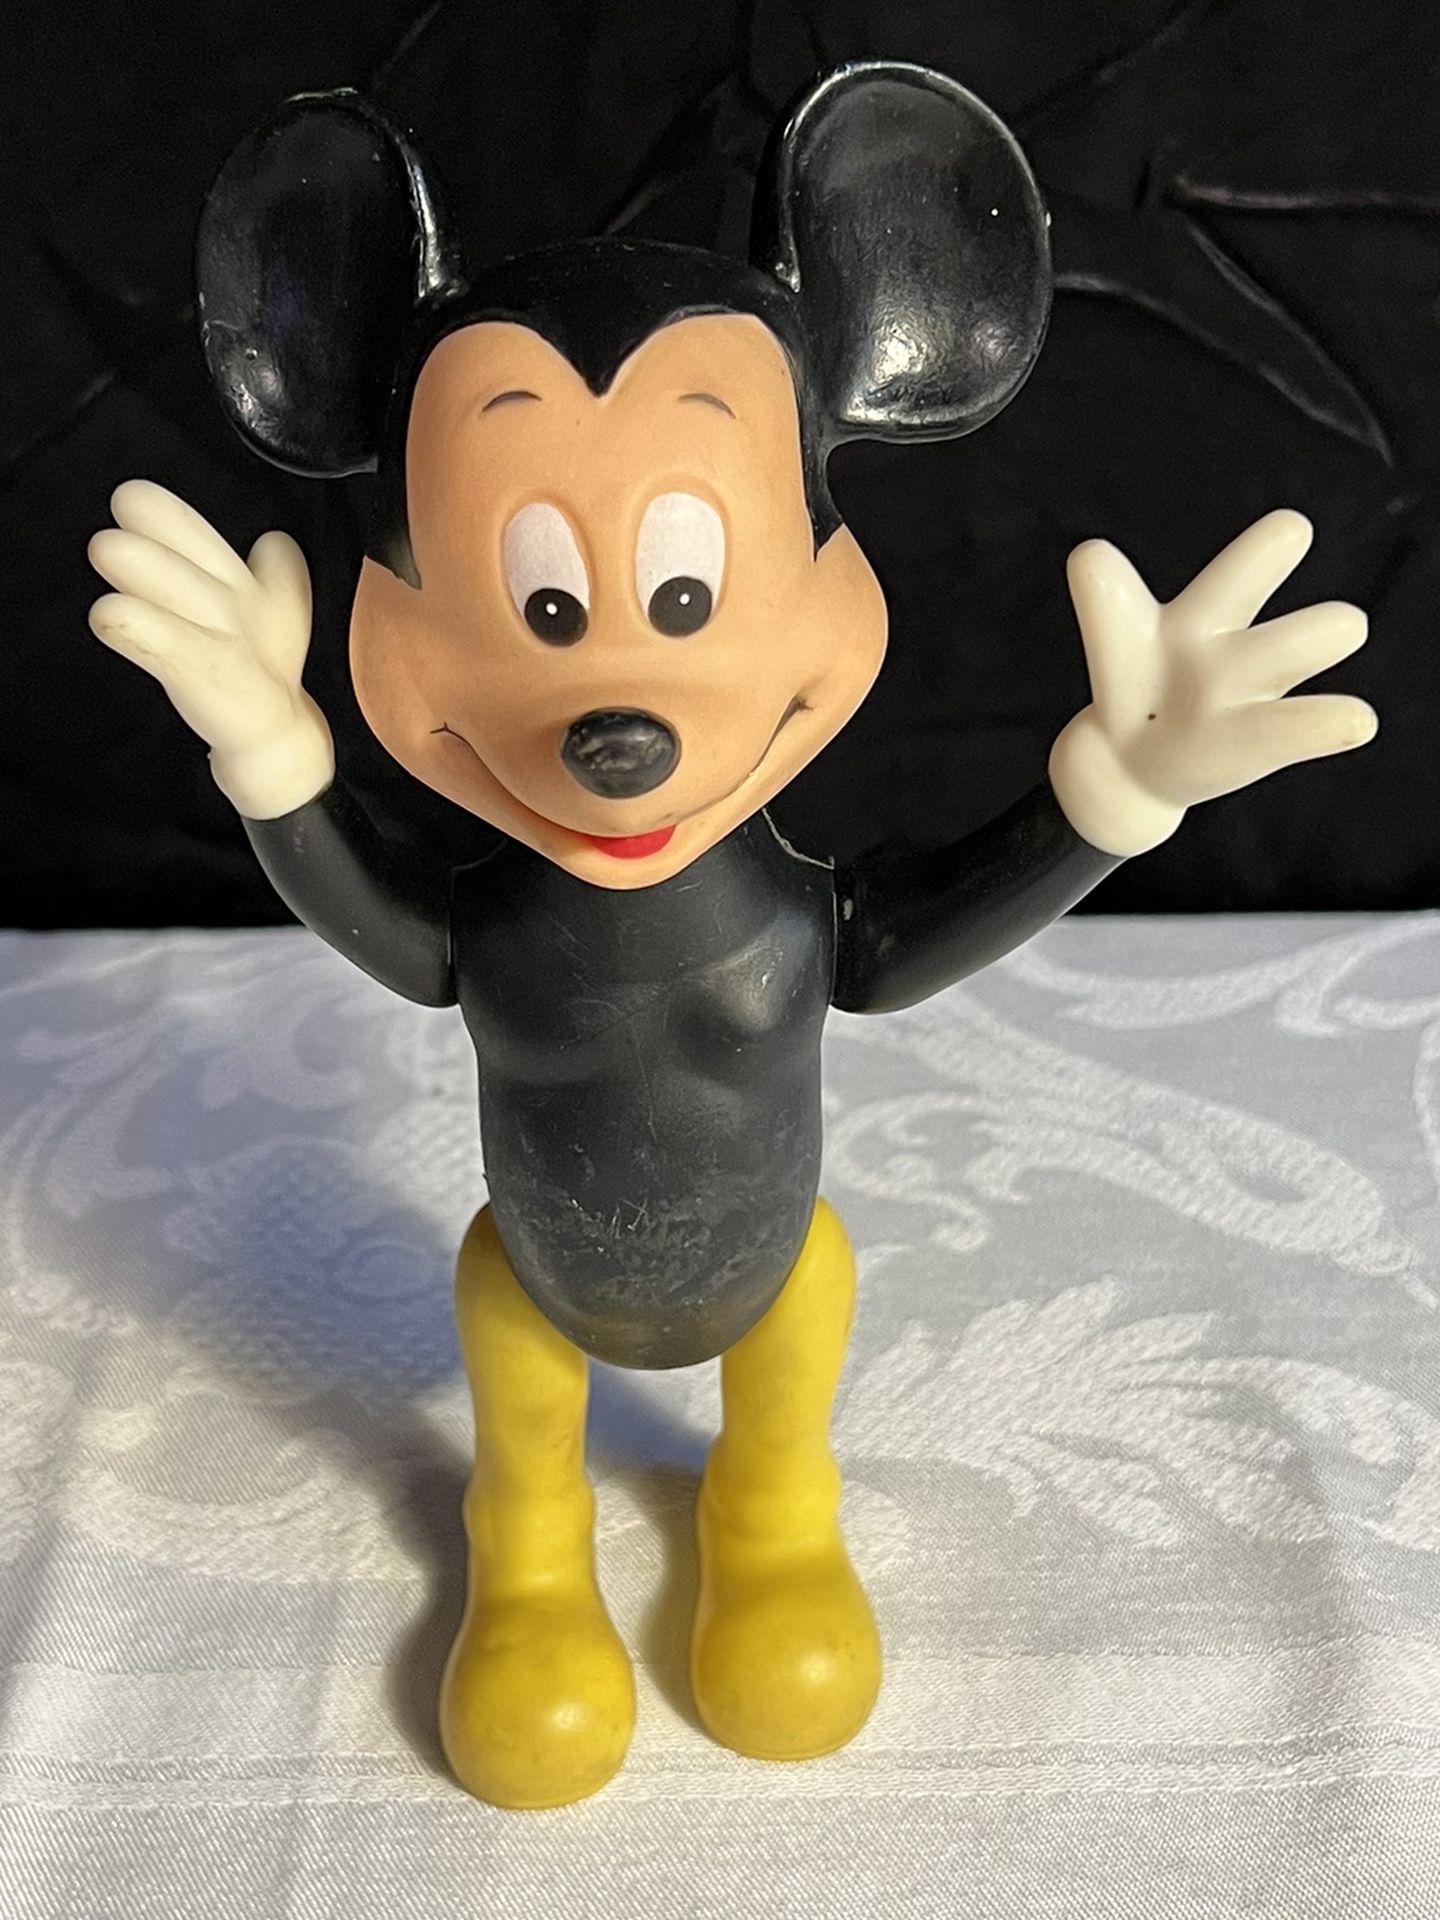 Vintage 1950s Disney Mickey Mouse Vinyl doll.